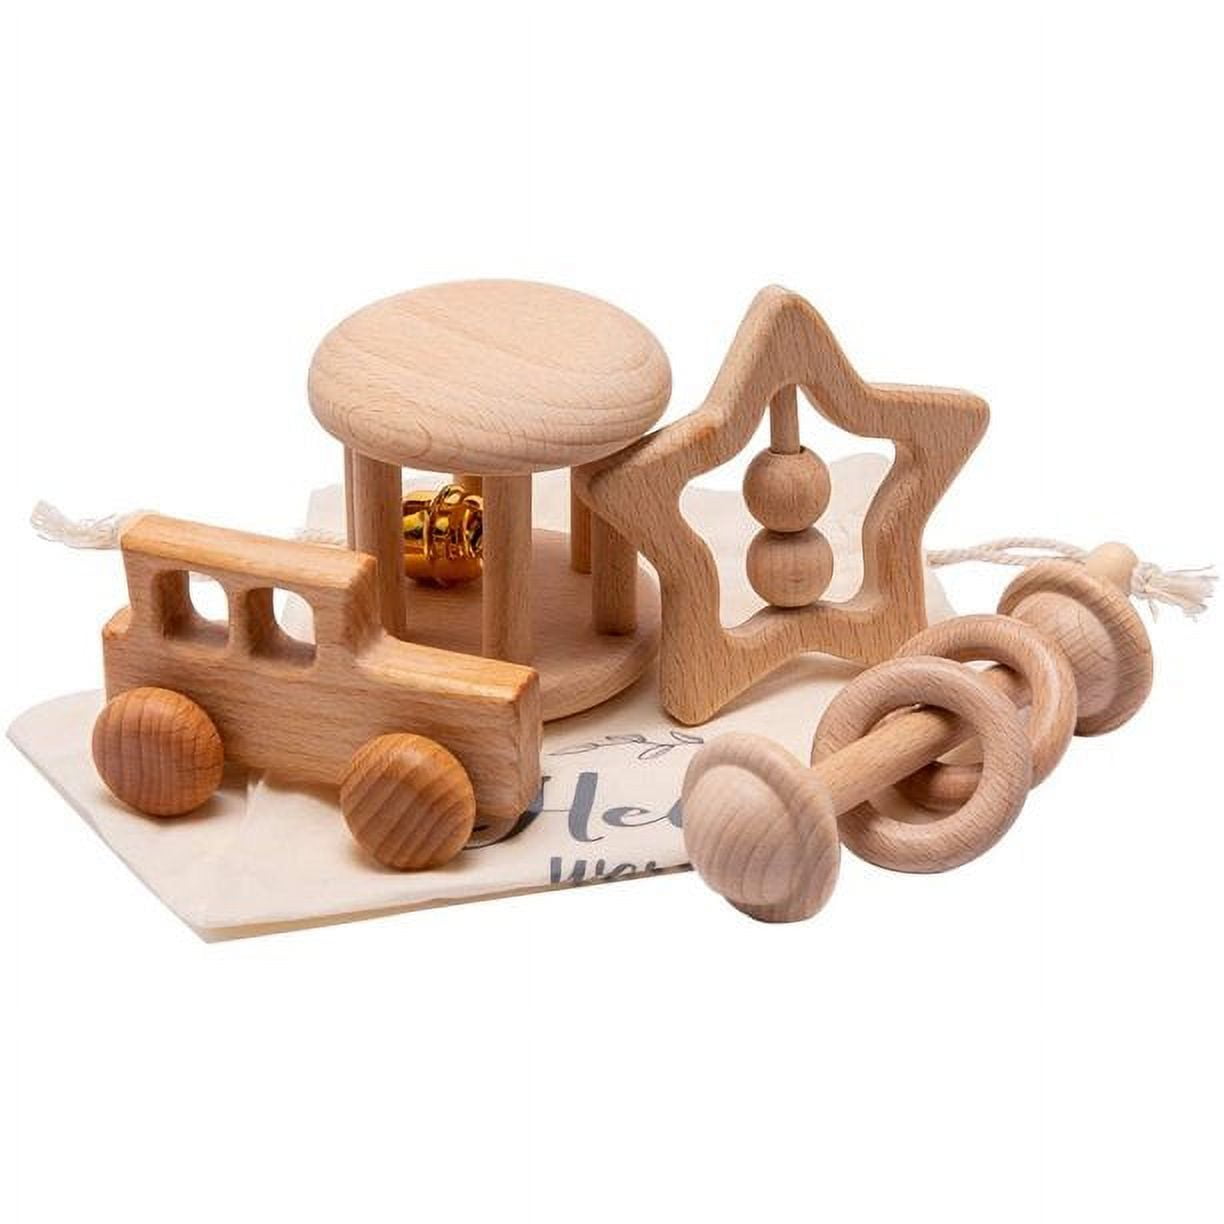 MONTI KIDS Wooden Toddler Toy Lot Montessori/Waldorf Toys Wood